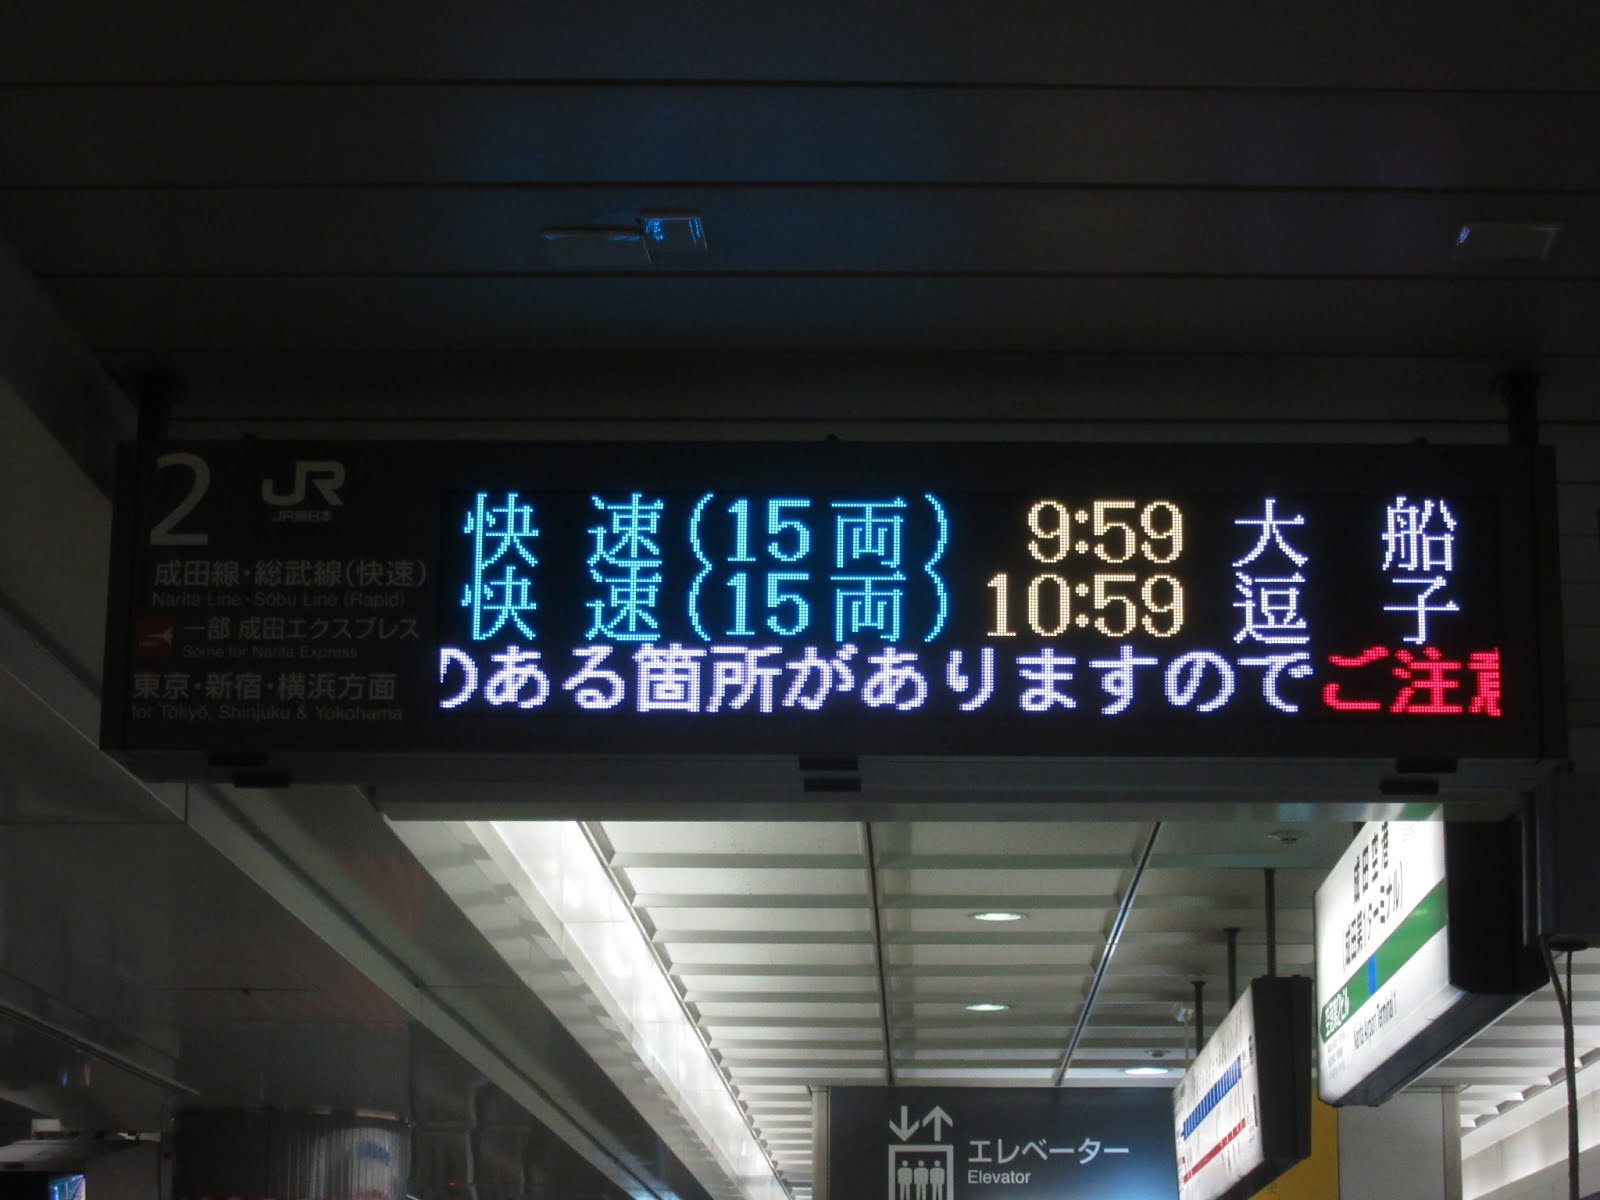 Yoshi223のブログ Jr成田空港駅 空港第2ビル駅の発車標 ディスプレイ Led電光掲示板